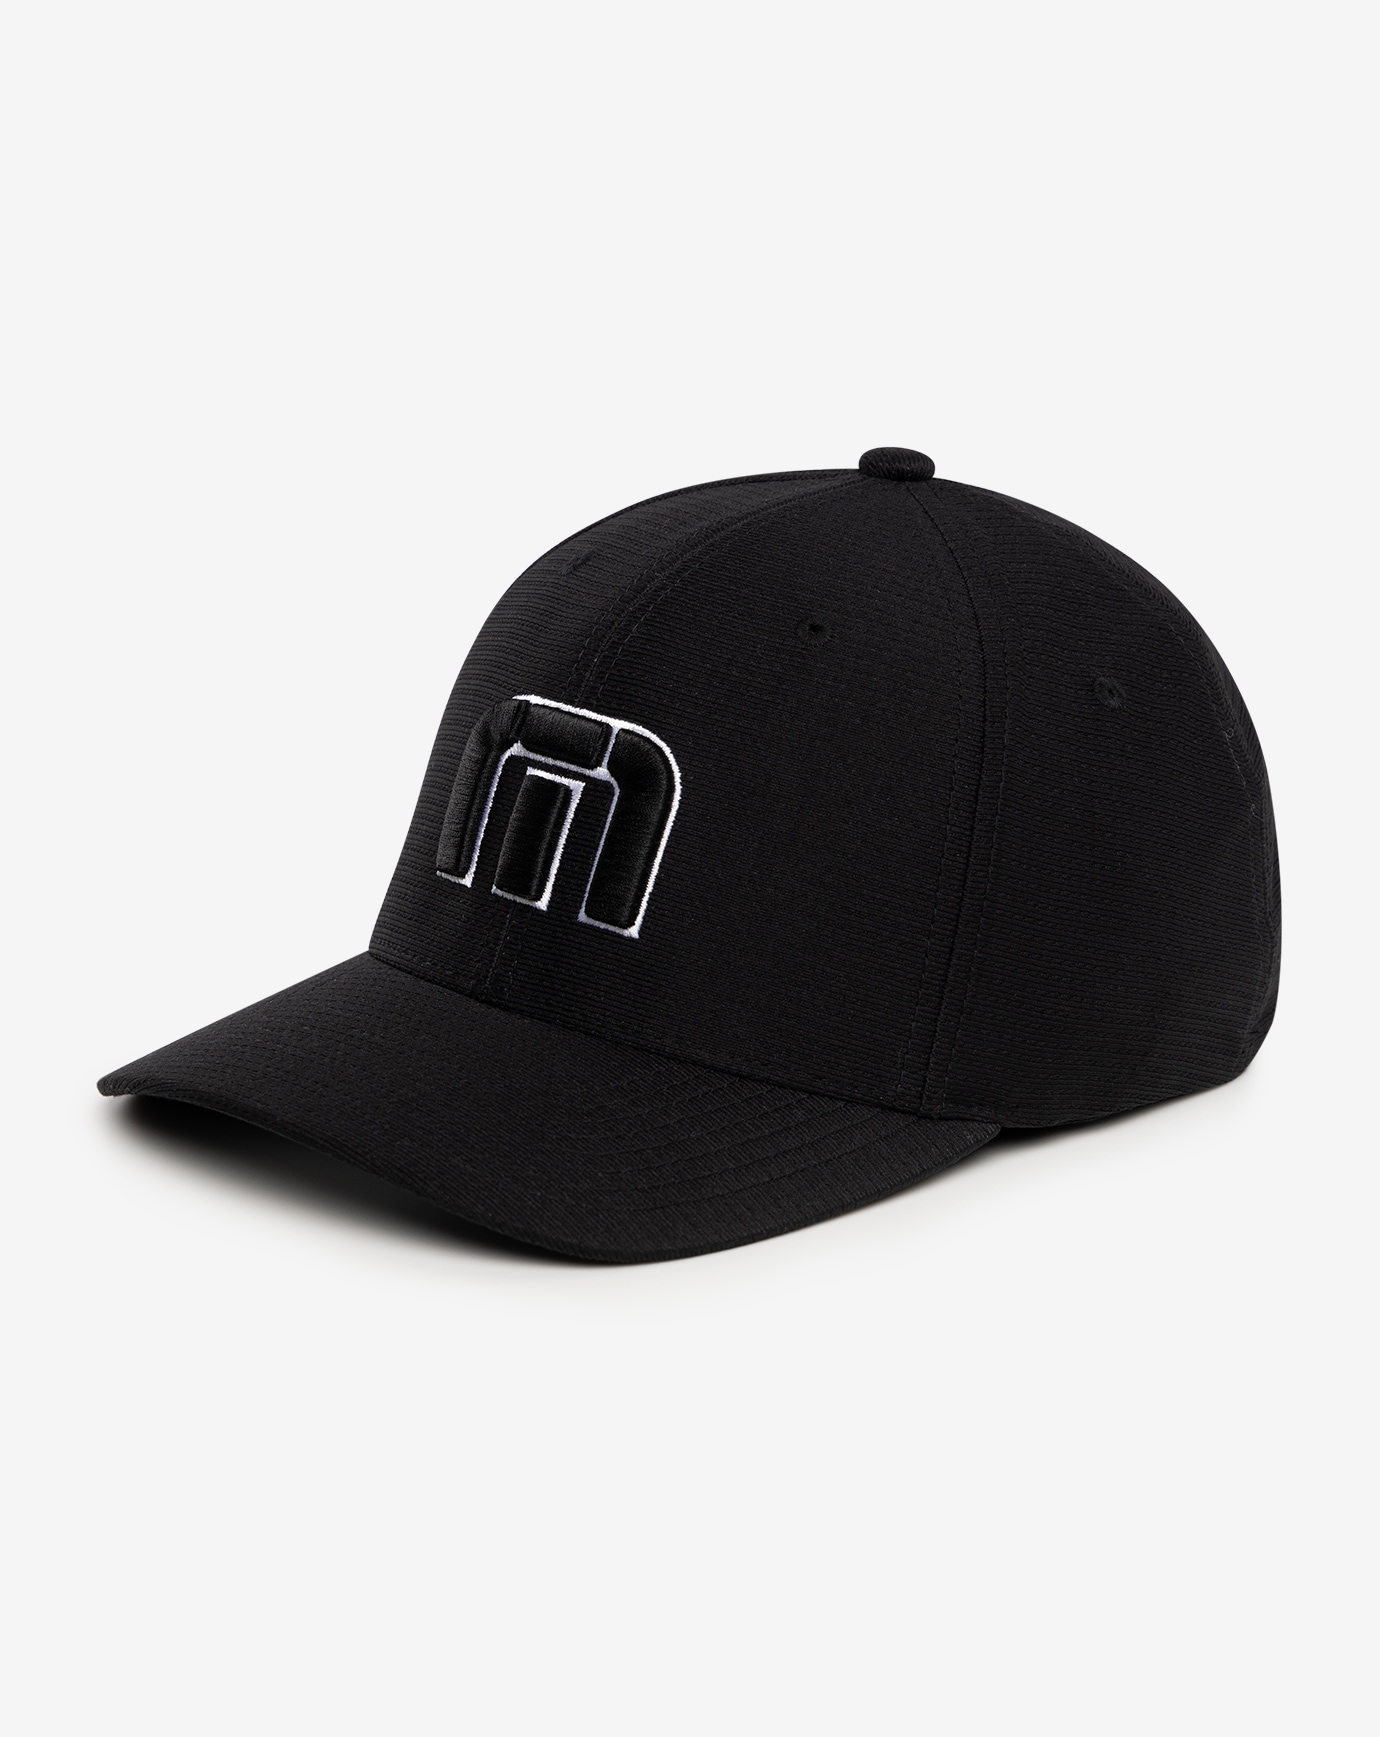 TravisMathew Men's Nassau Golf Hat, Small/Medium, Black